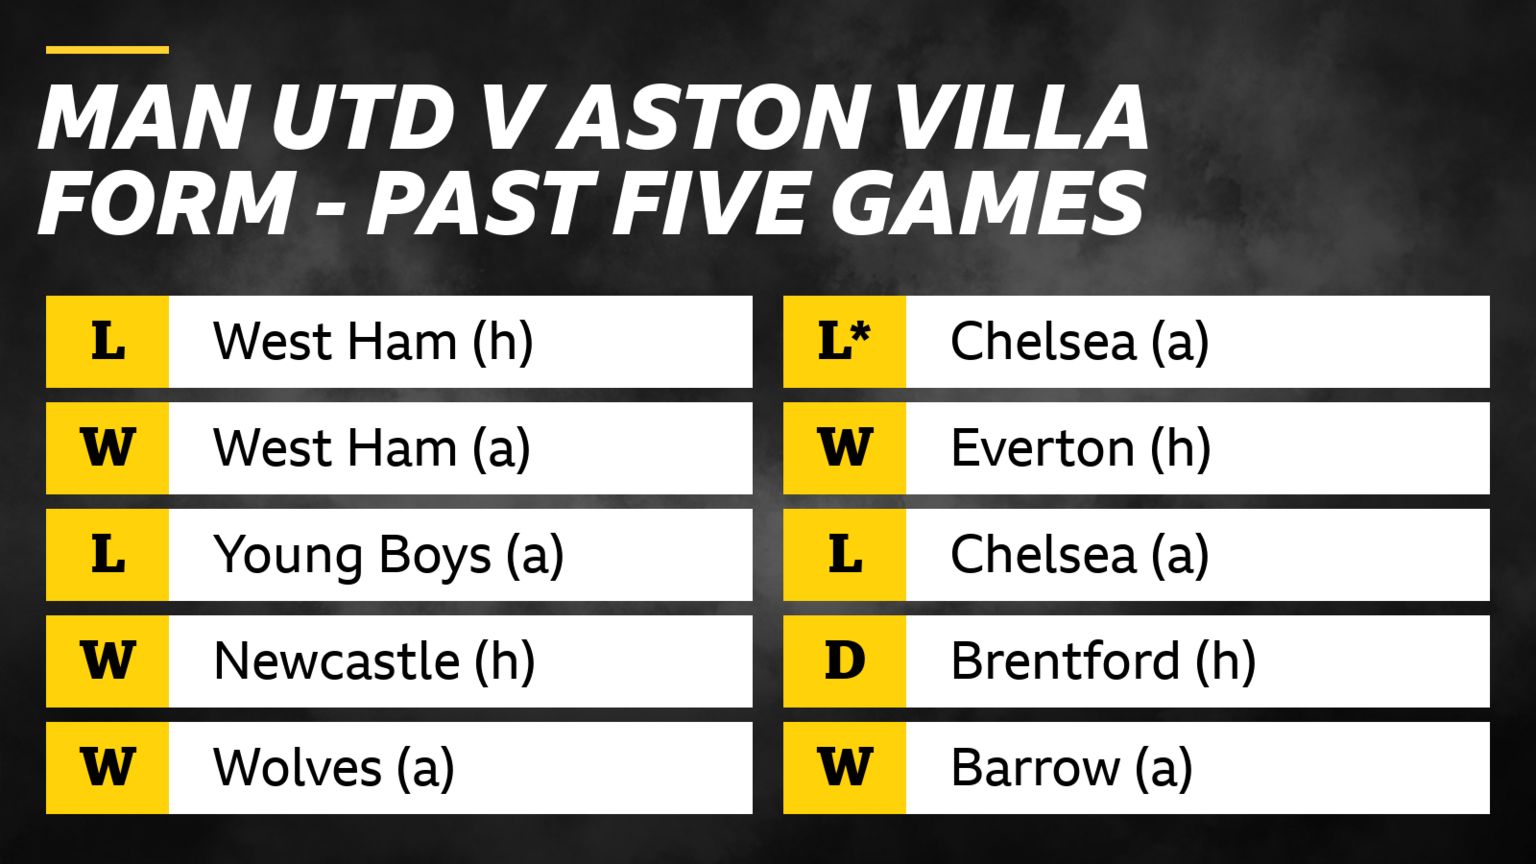 Man Utd v Aston Villa - form past five games: Man Utd: Loss v West Ham (h), Win v West Ham (a), Loss v Young Boys (a), Wins v Newcastle (h) and Wolves (a). Aston Villa: Loss v Chelsea on penalties (a), win v Everton (h), loss v Chelsea (a), draw v Brentford (h), win v Barrow (a)